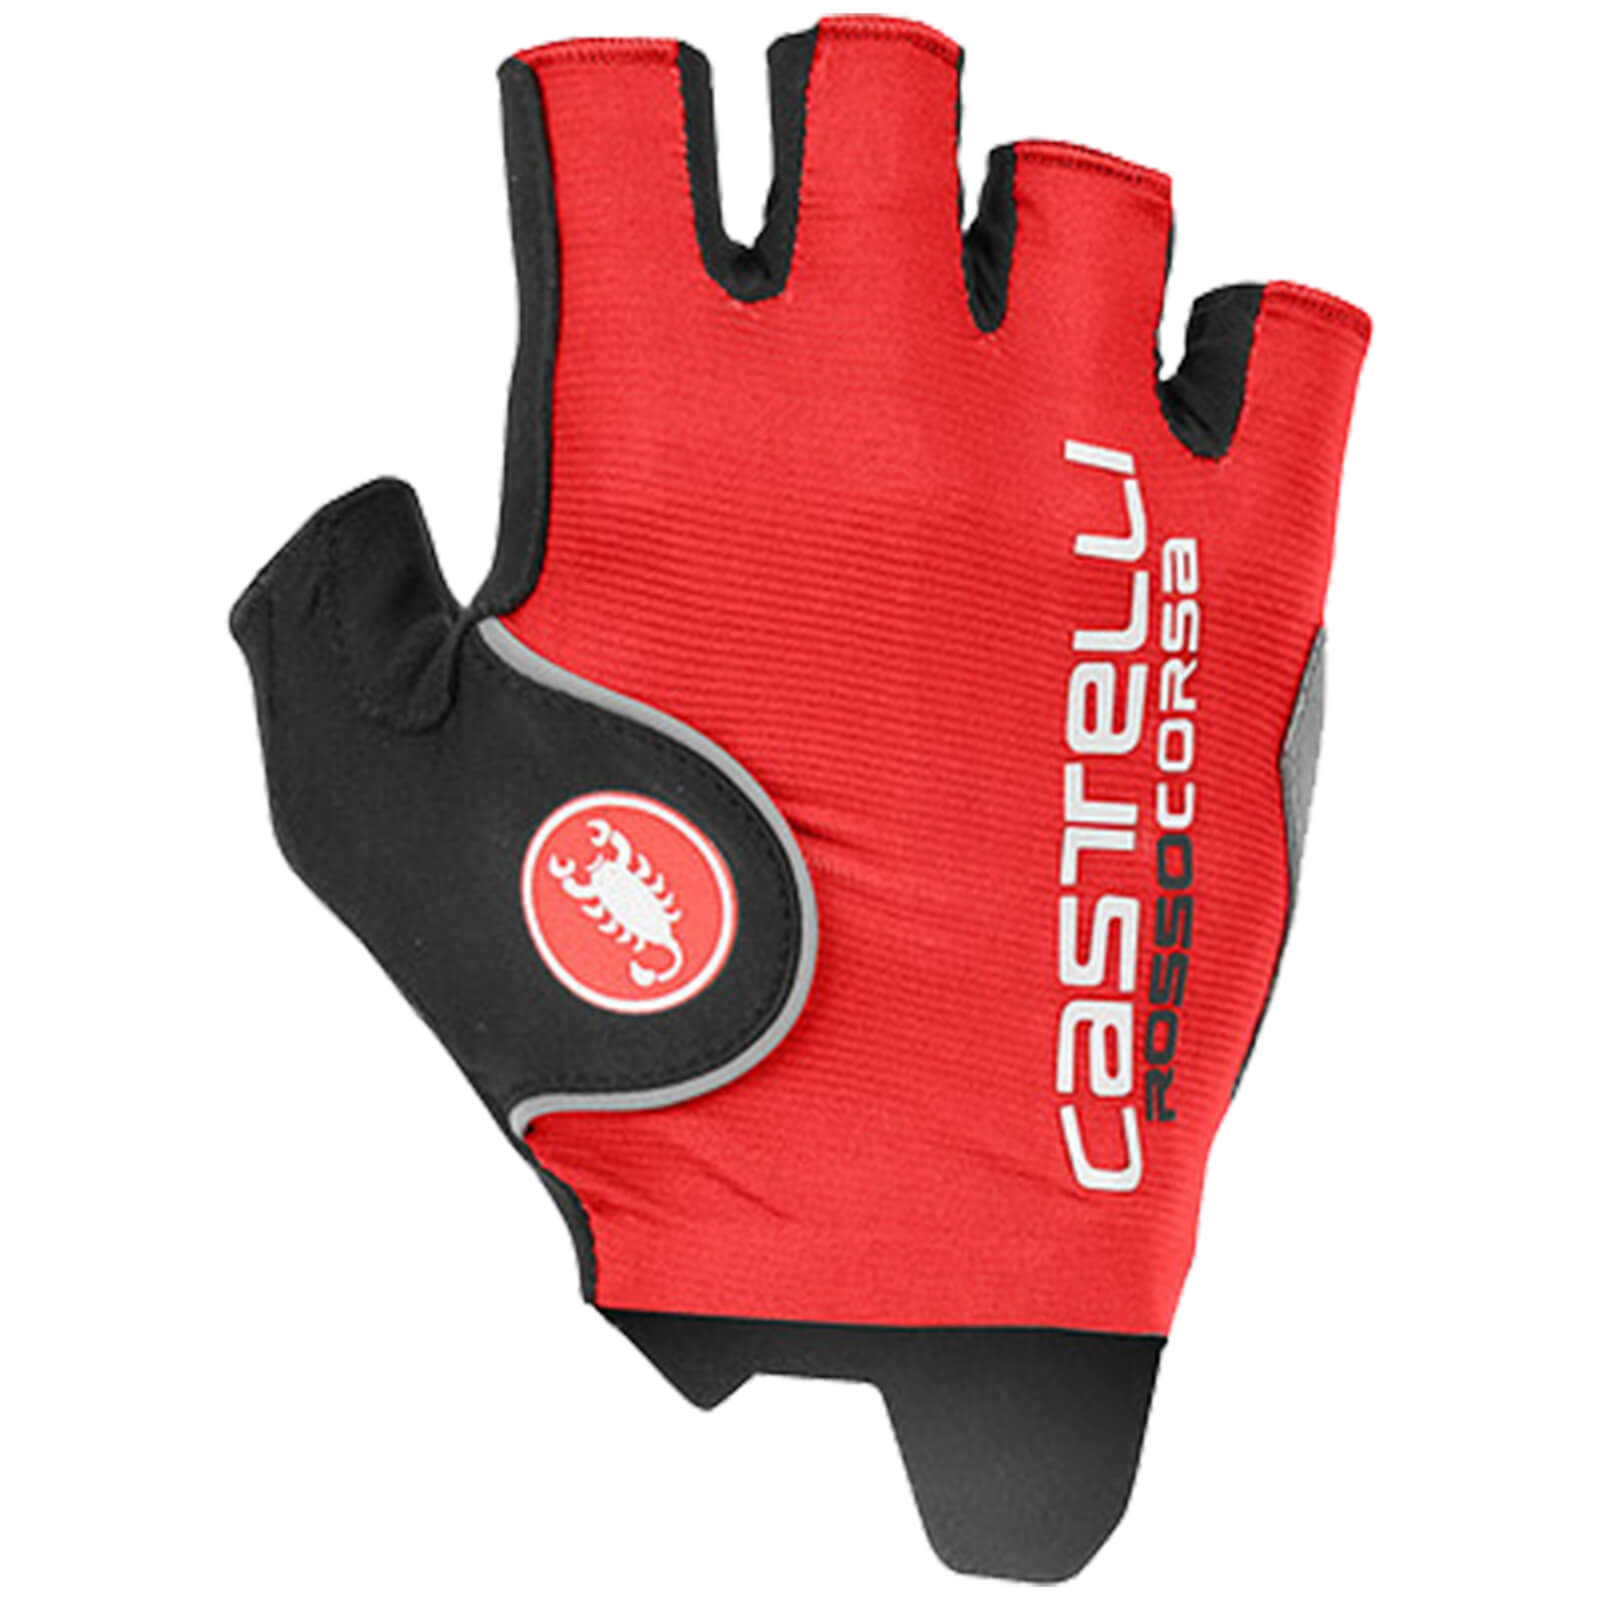 Castelli Rosso Corsa Pro Gloves - Black - XS - Red